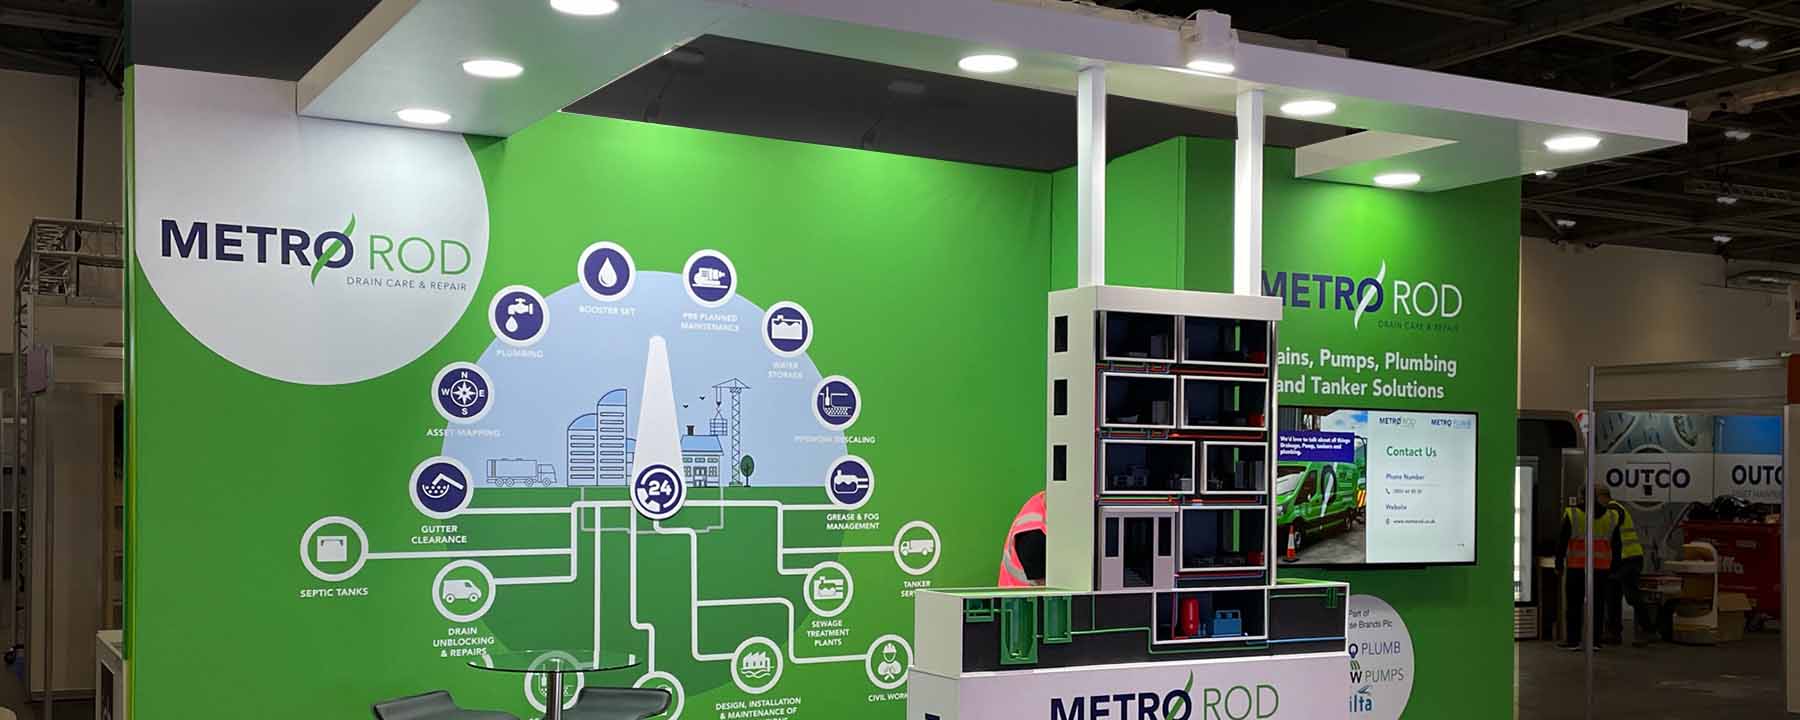 metrorod exhibition stand